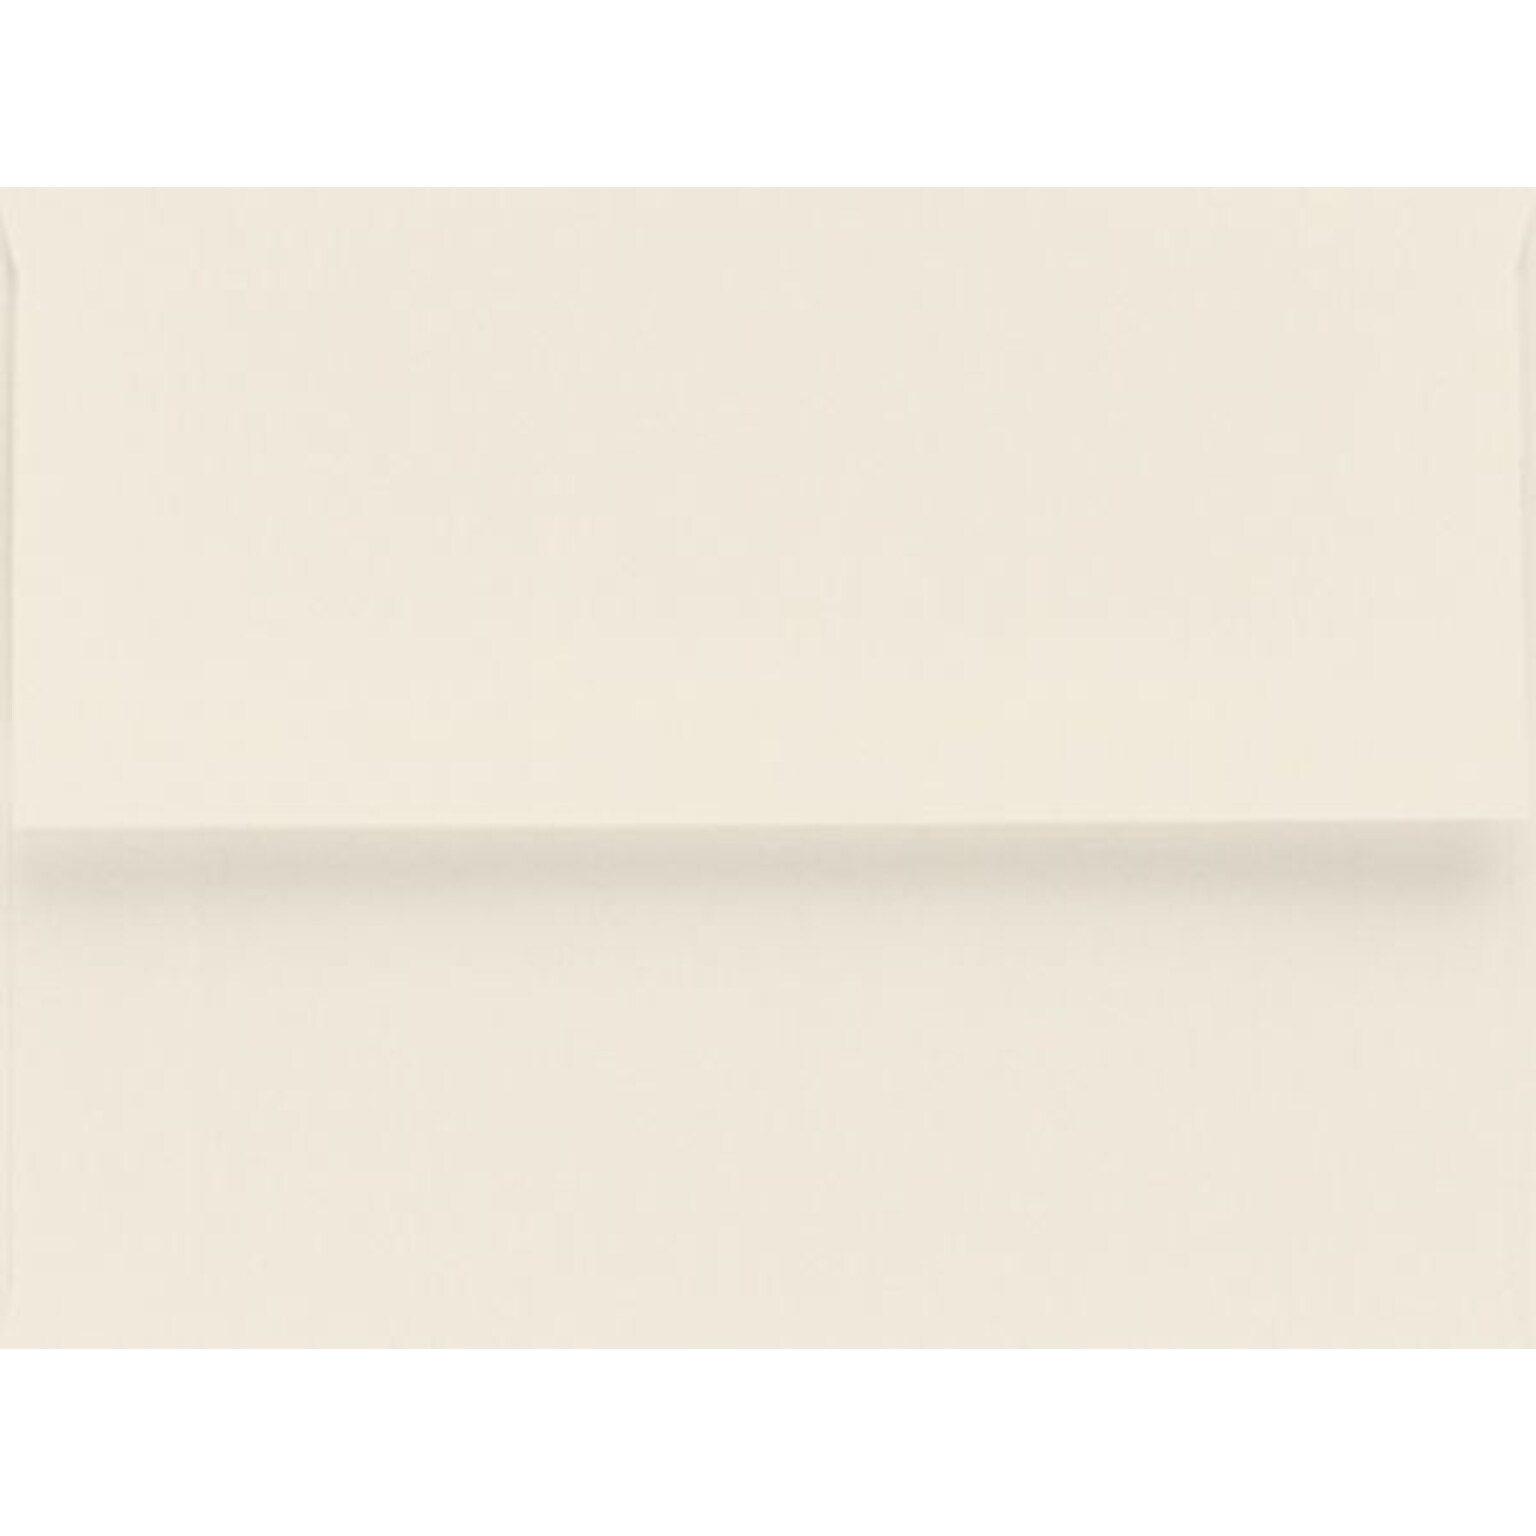 Masterpiece Studio® A-2 Envelopes, Ivory